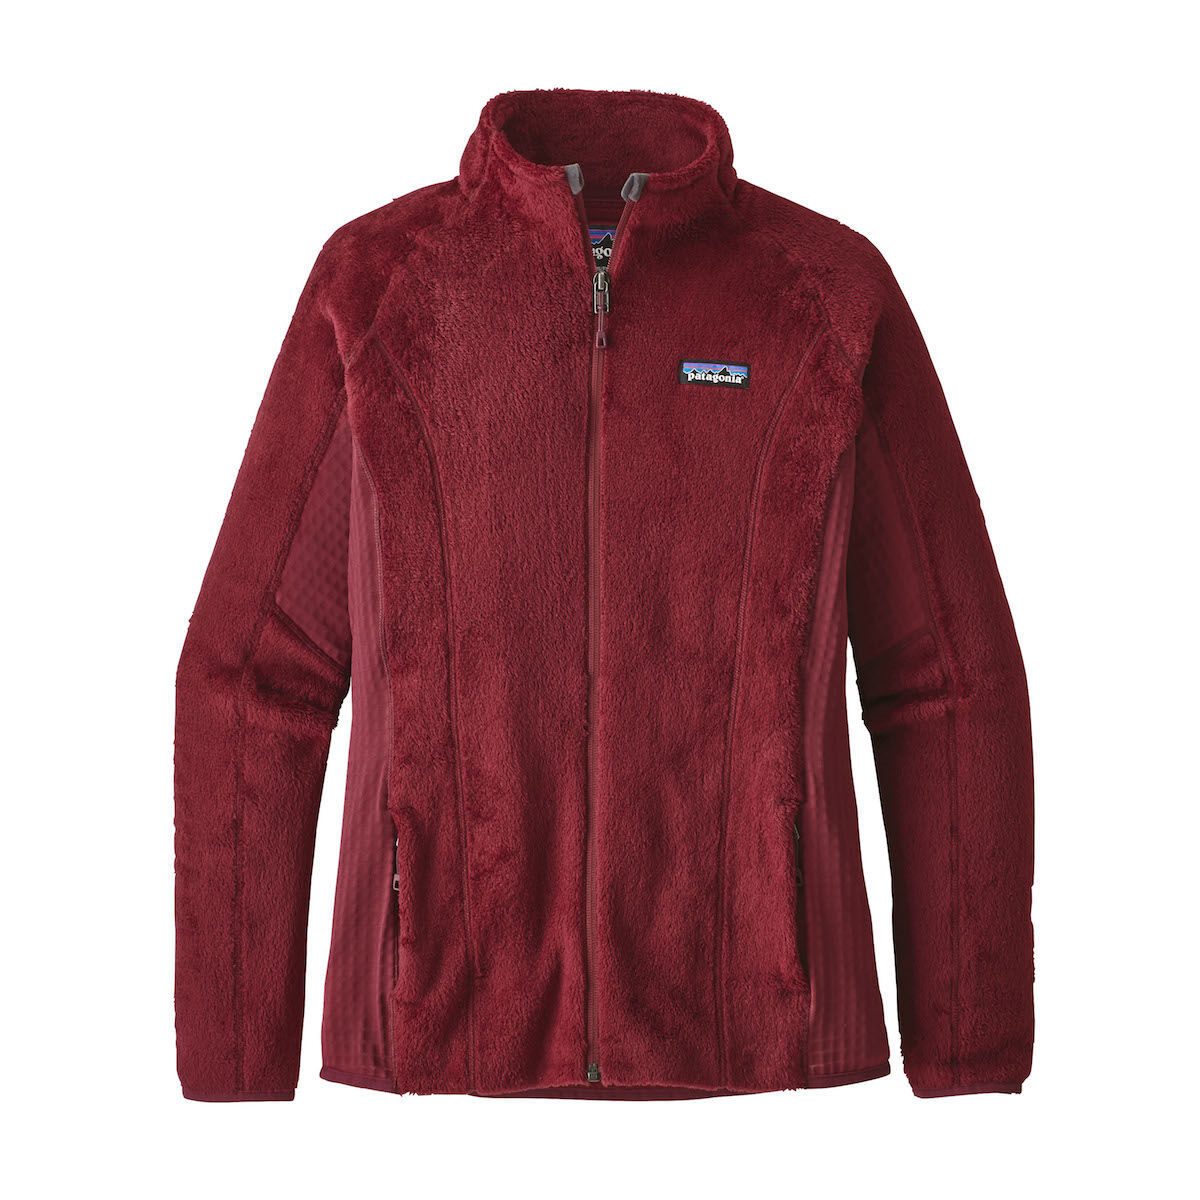 Patagonia - R2 Jacket - Fleece jacket - Women's